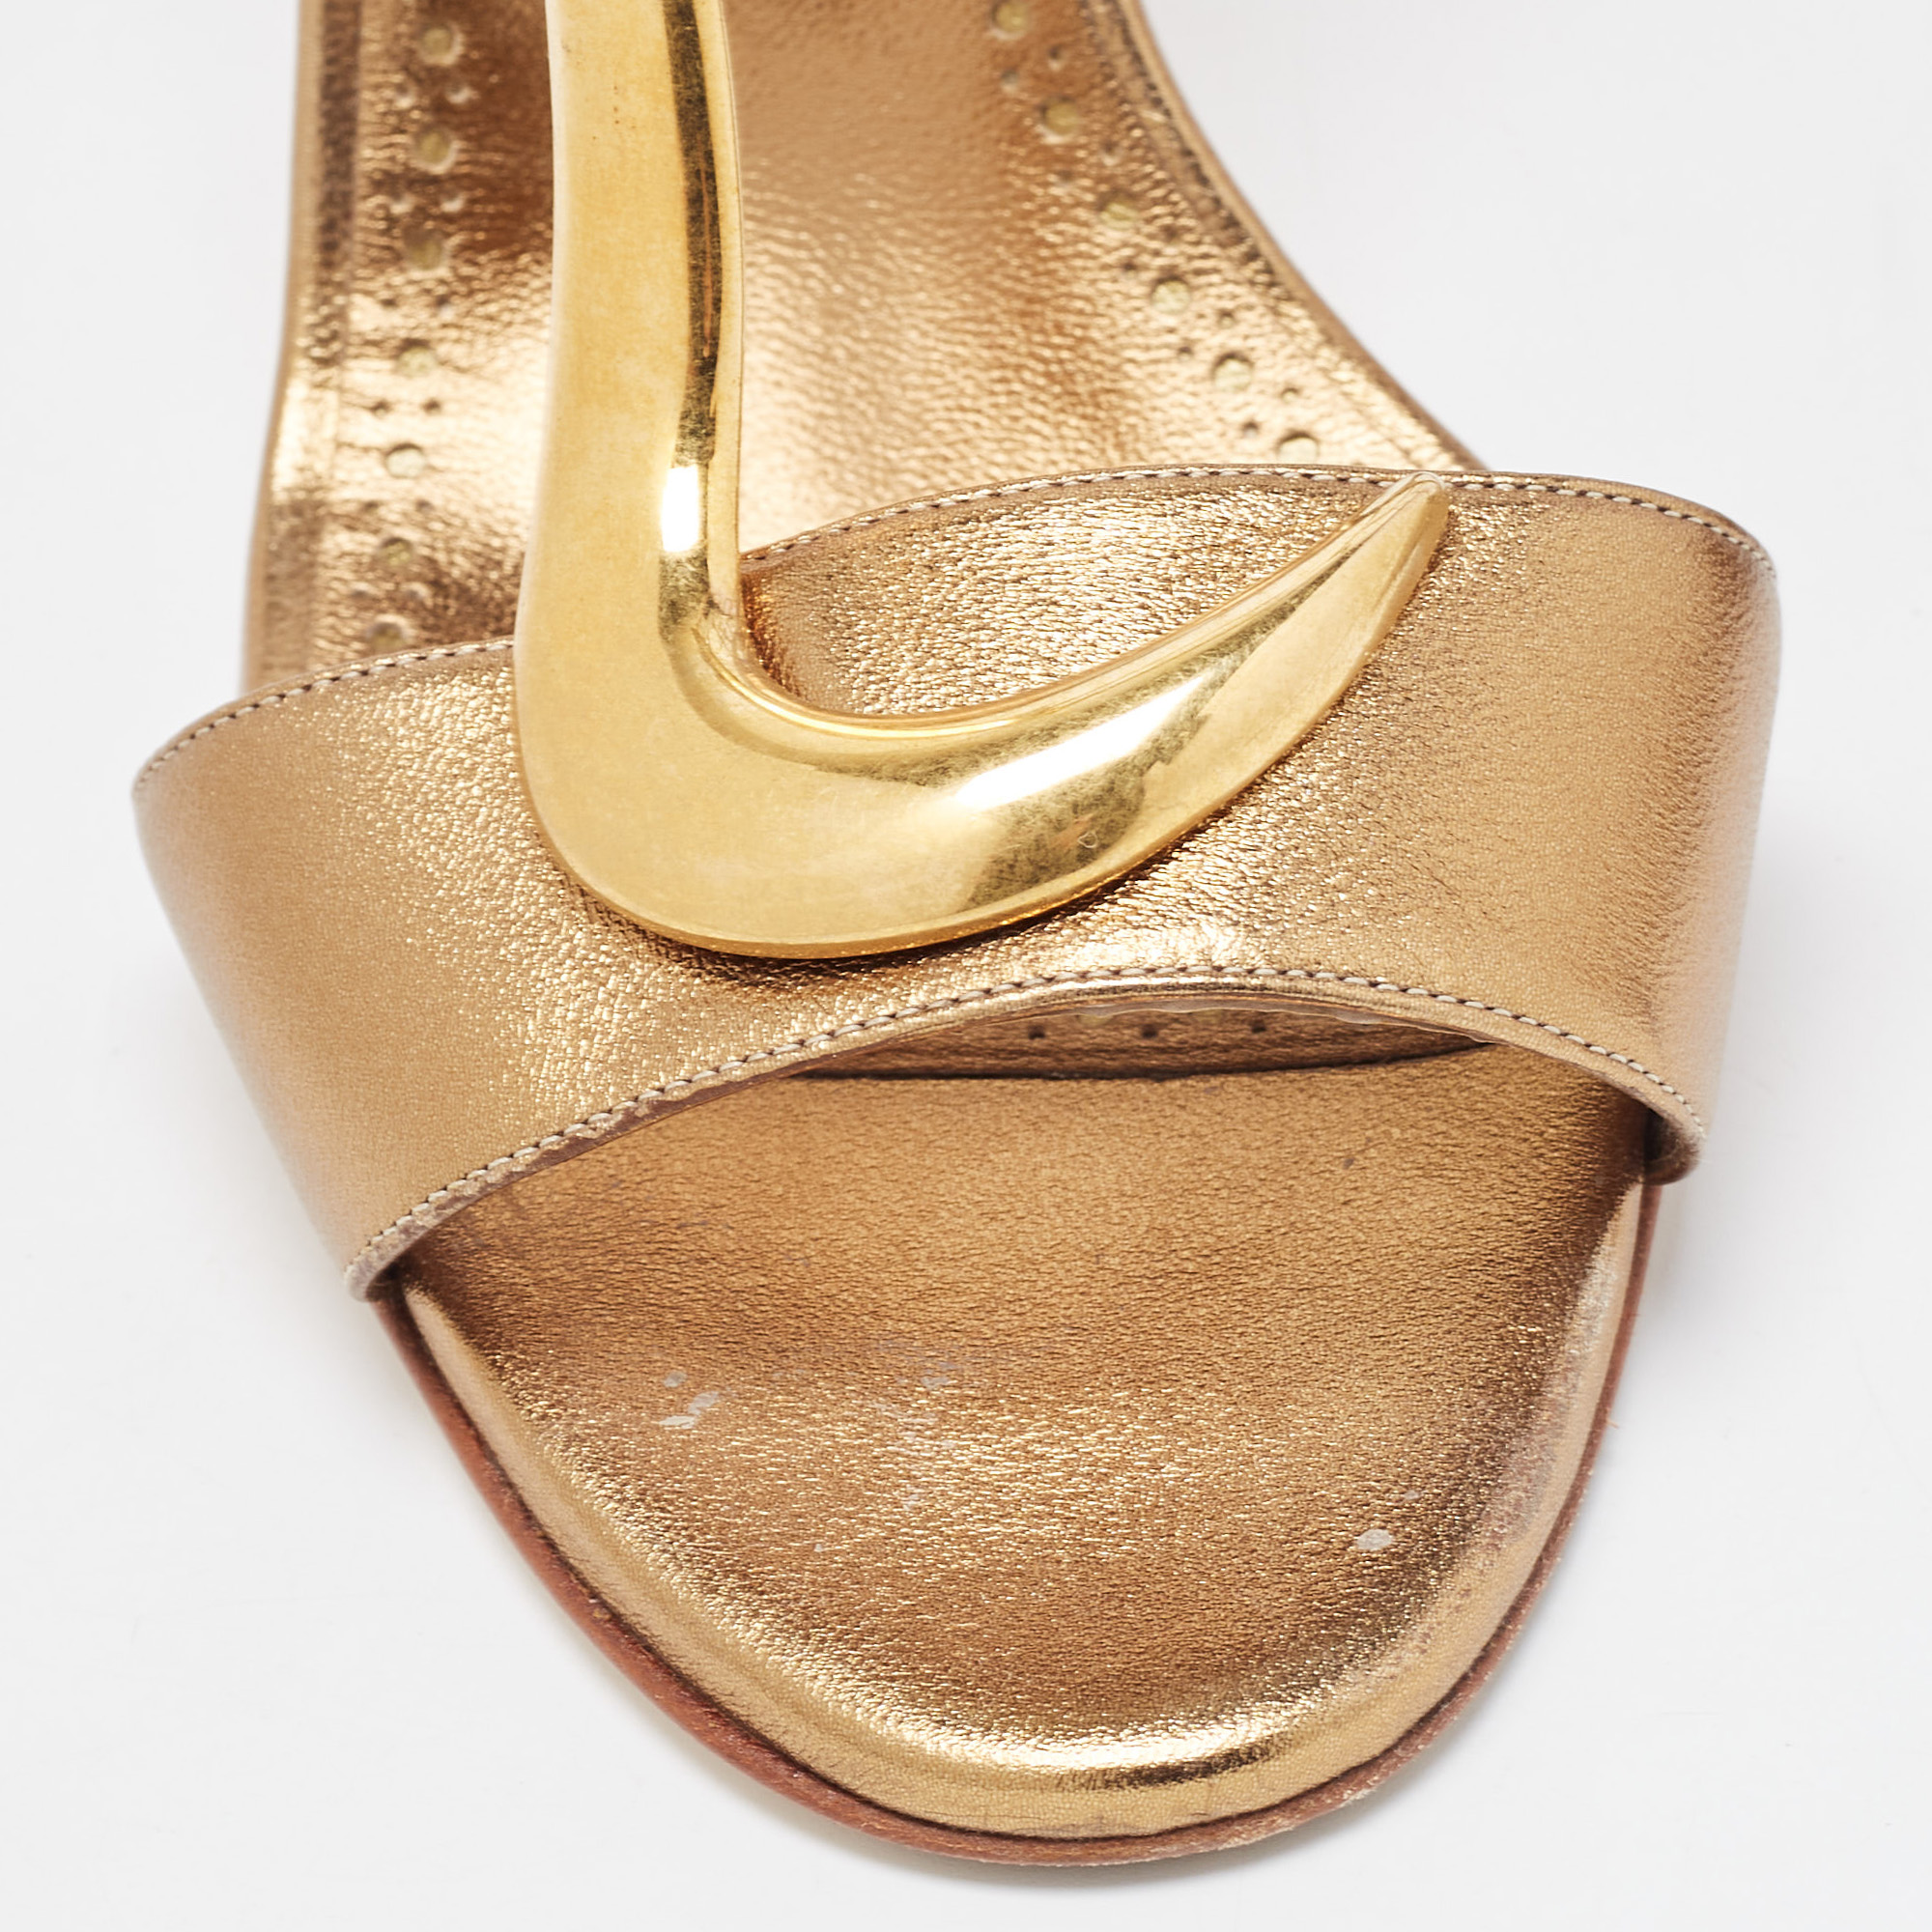 Manolo Blahnik Metallic Leather Ankle Strap Sandals Size 39